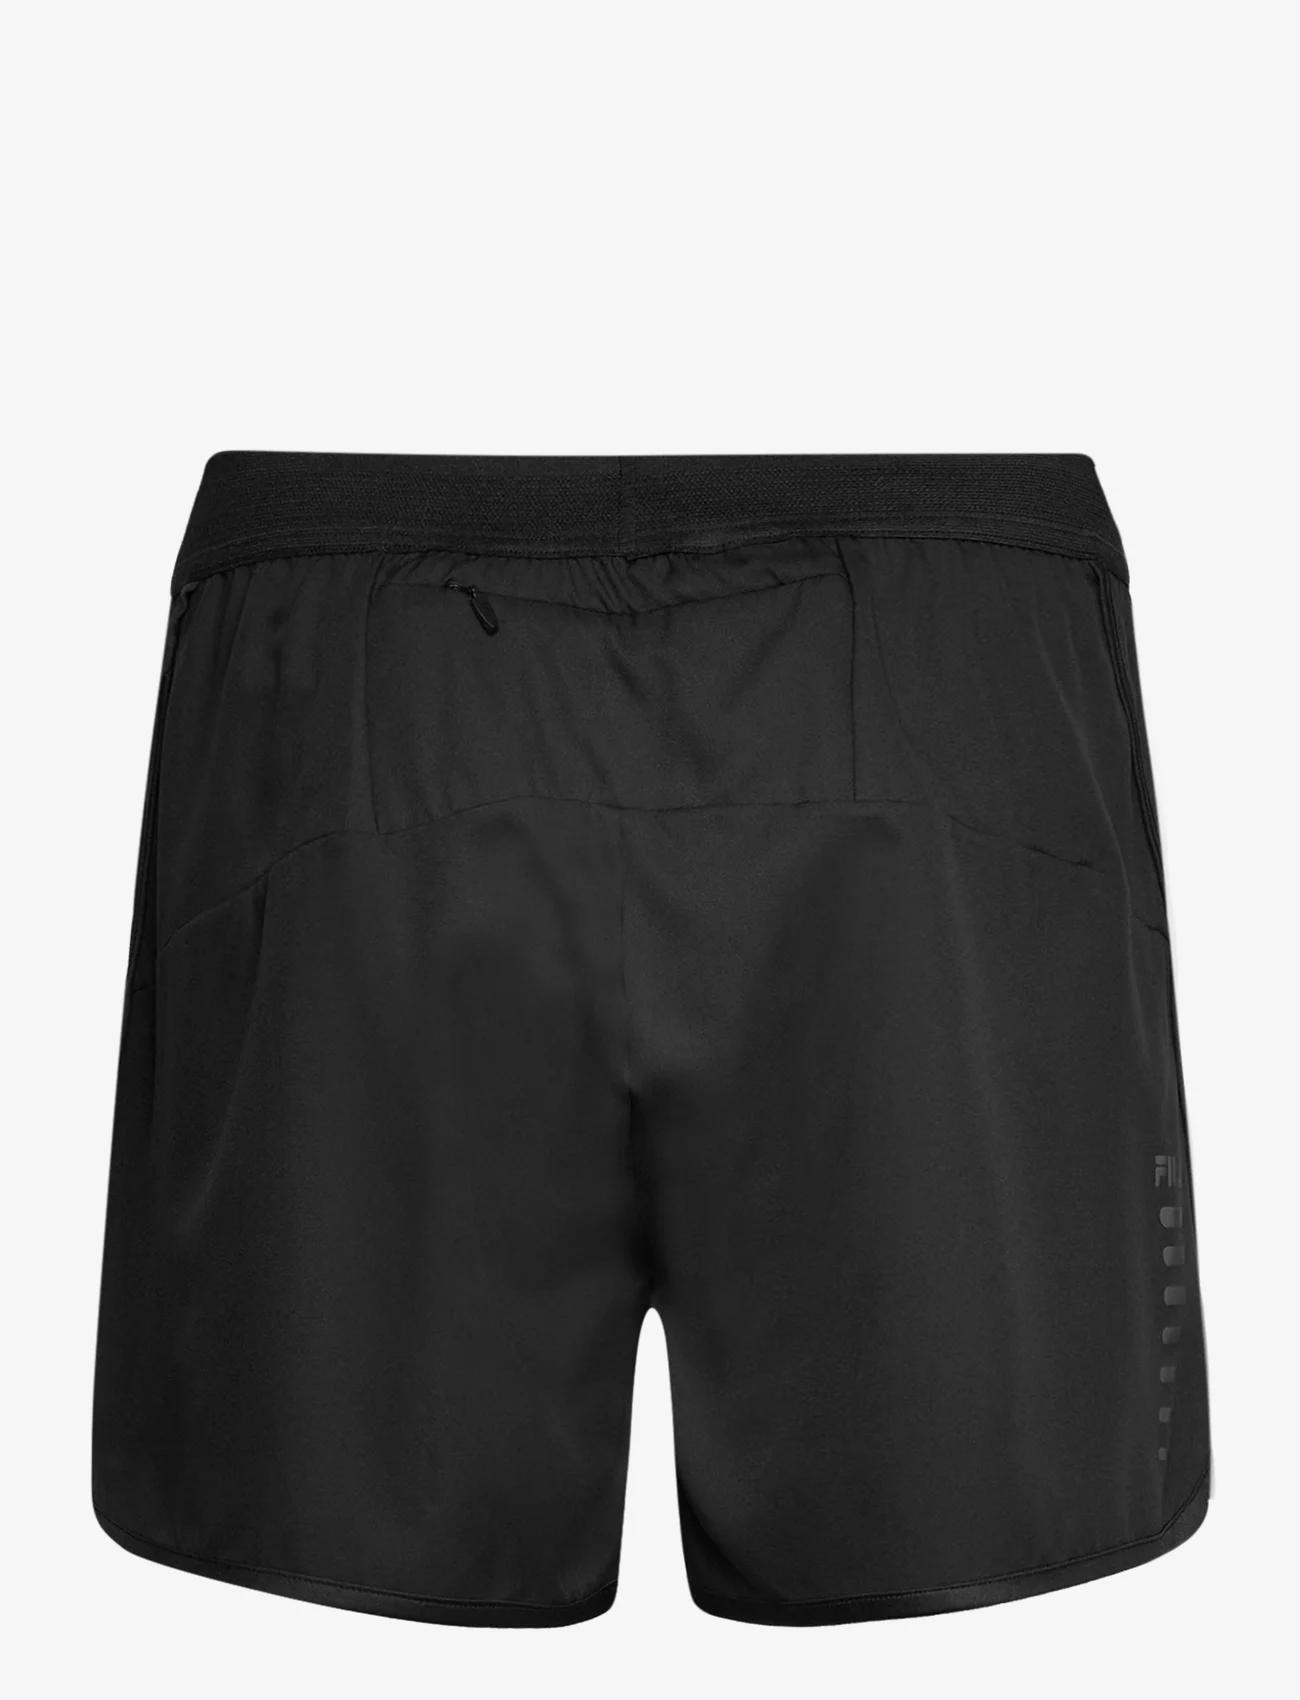 FILA - ROVERTO running shorts - treningsshorts - black - 1